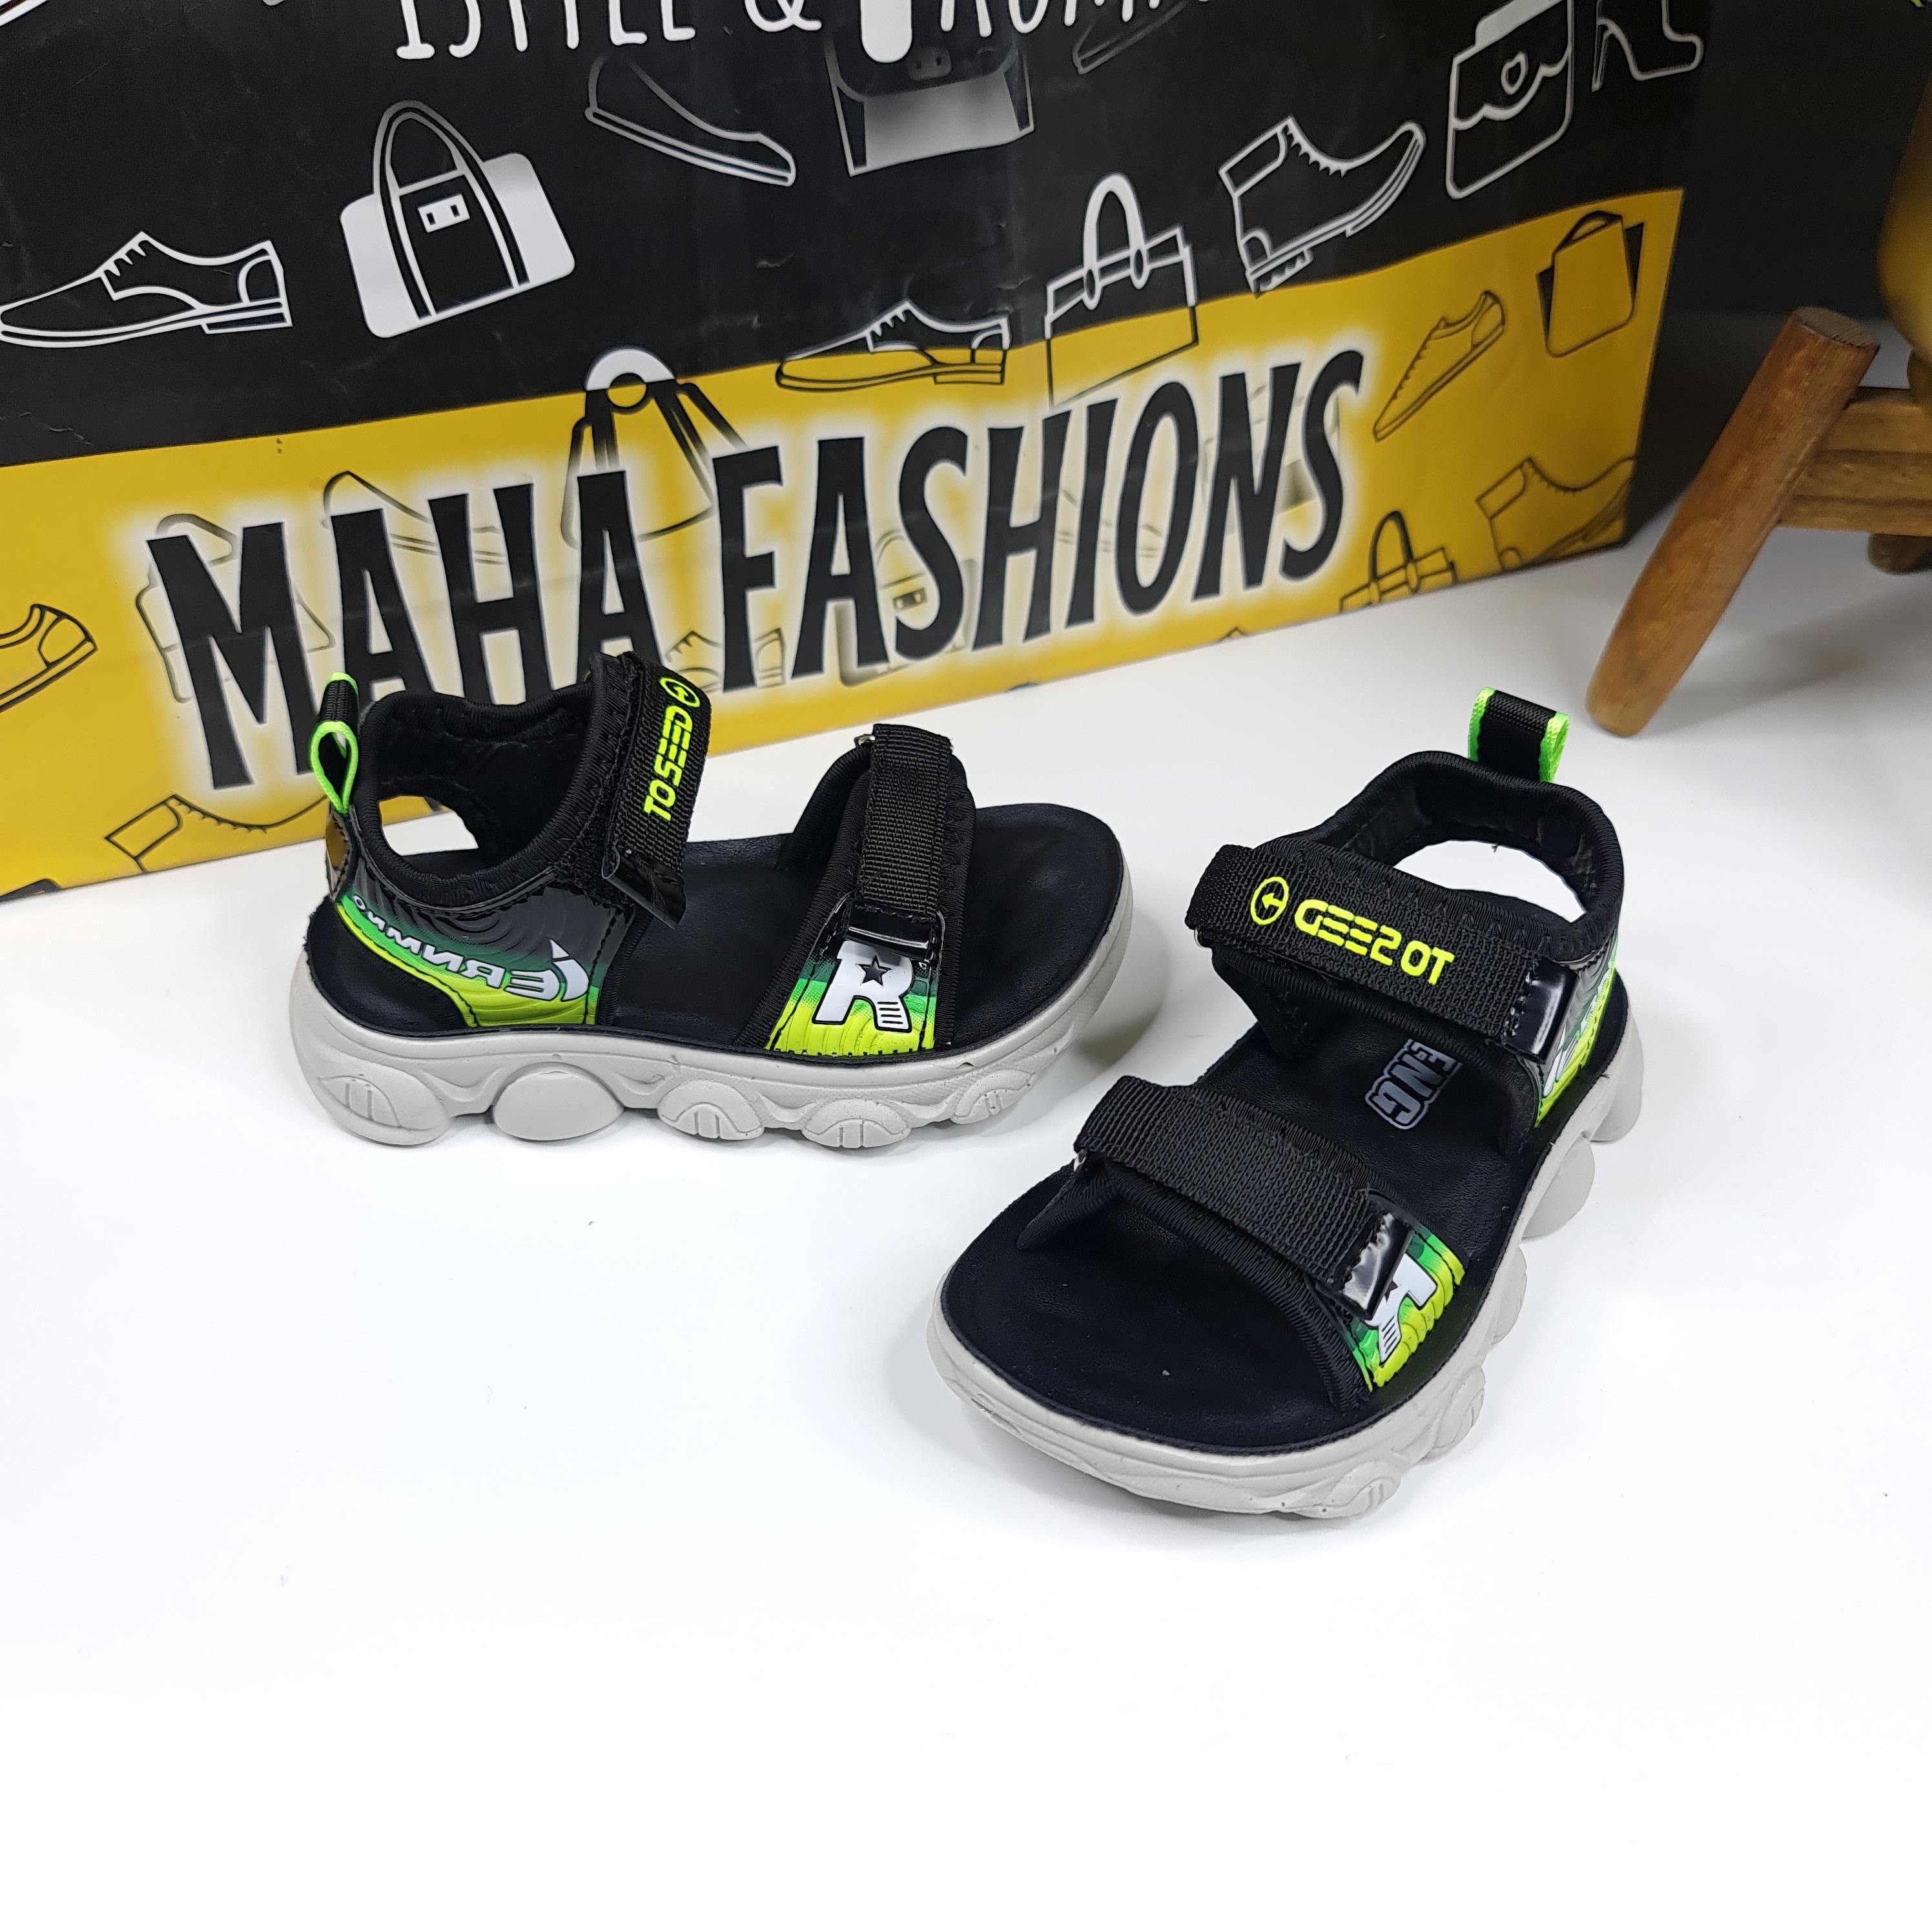 SMK-012 GREEN - Maha fashions -  